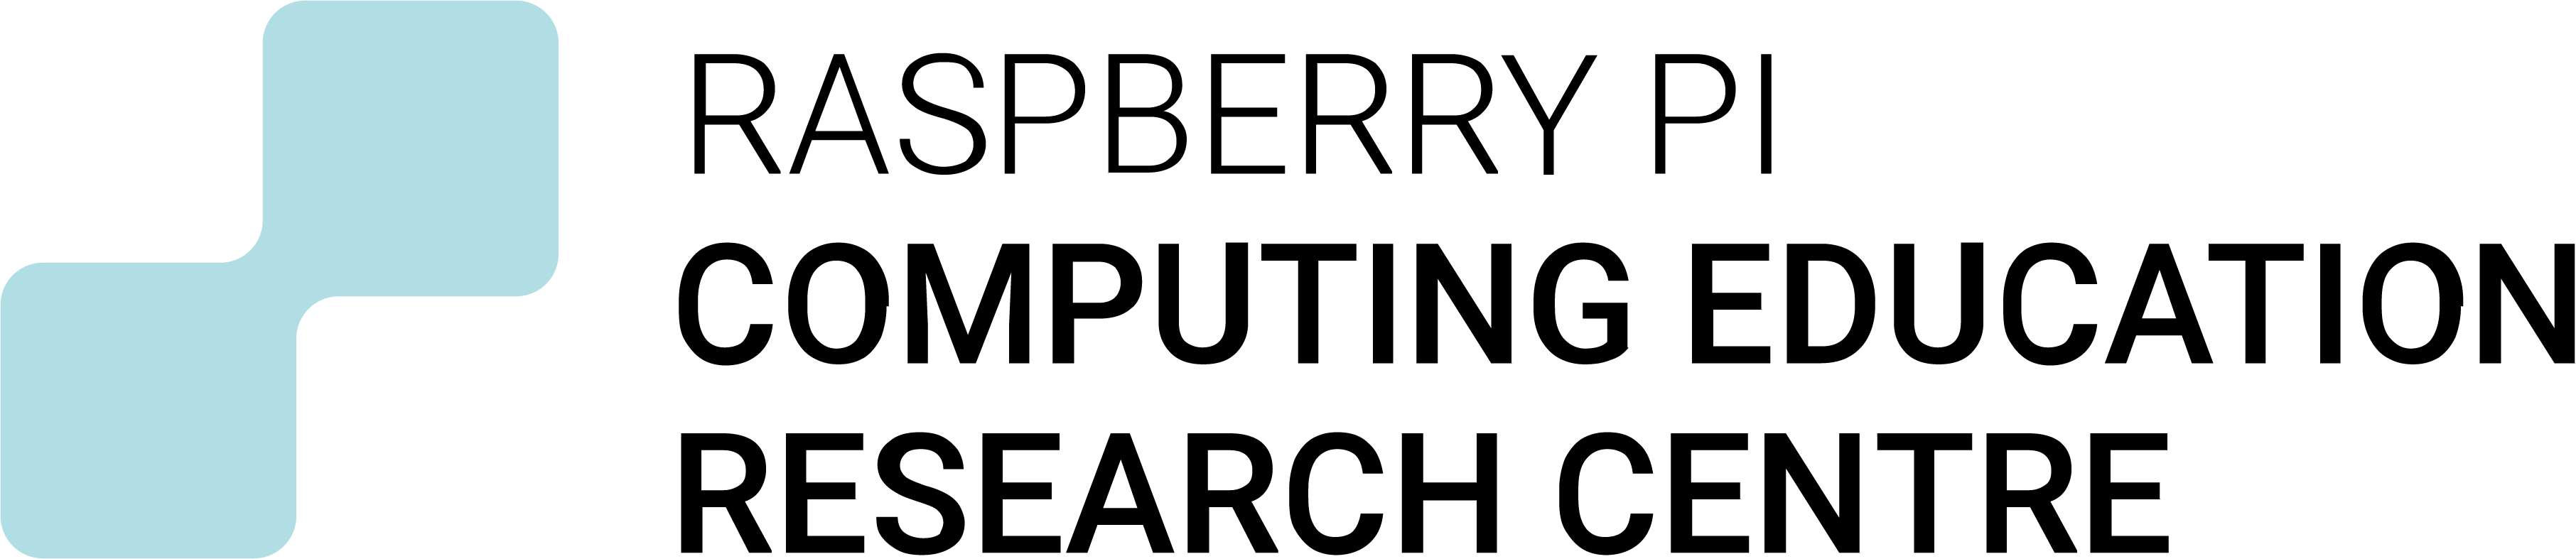 Raspberry Pi Computing Education Research Centre 